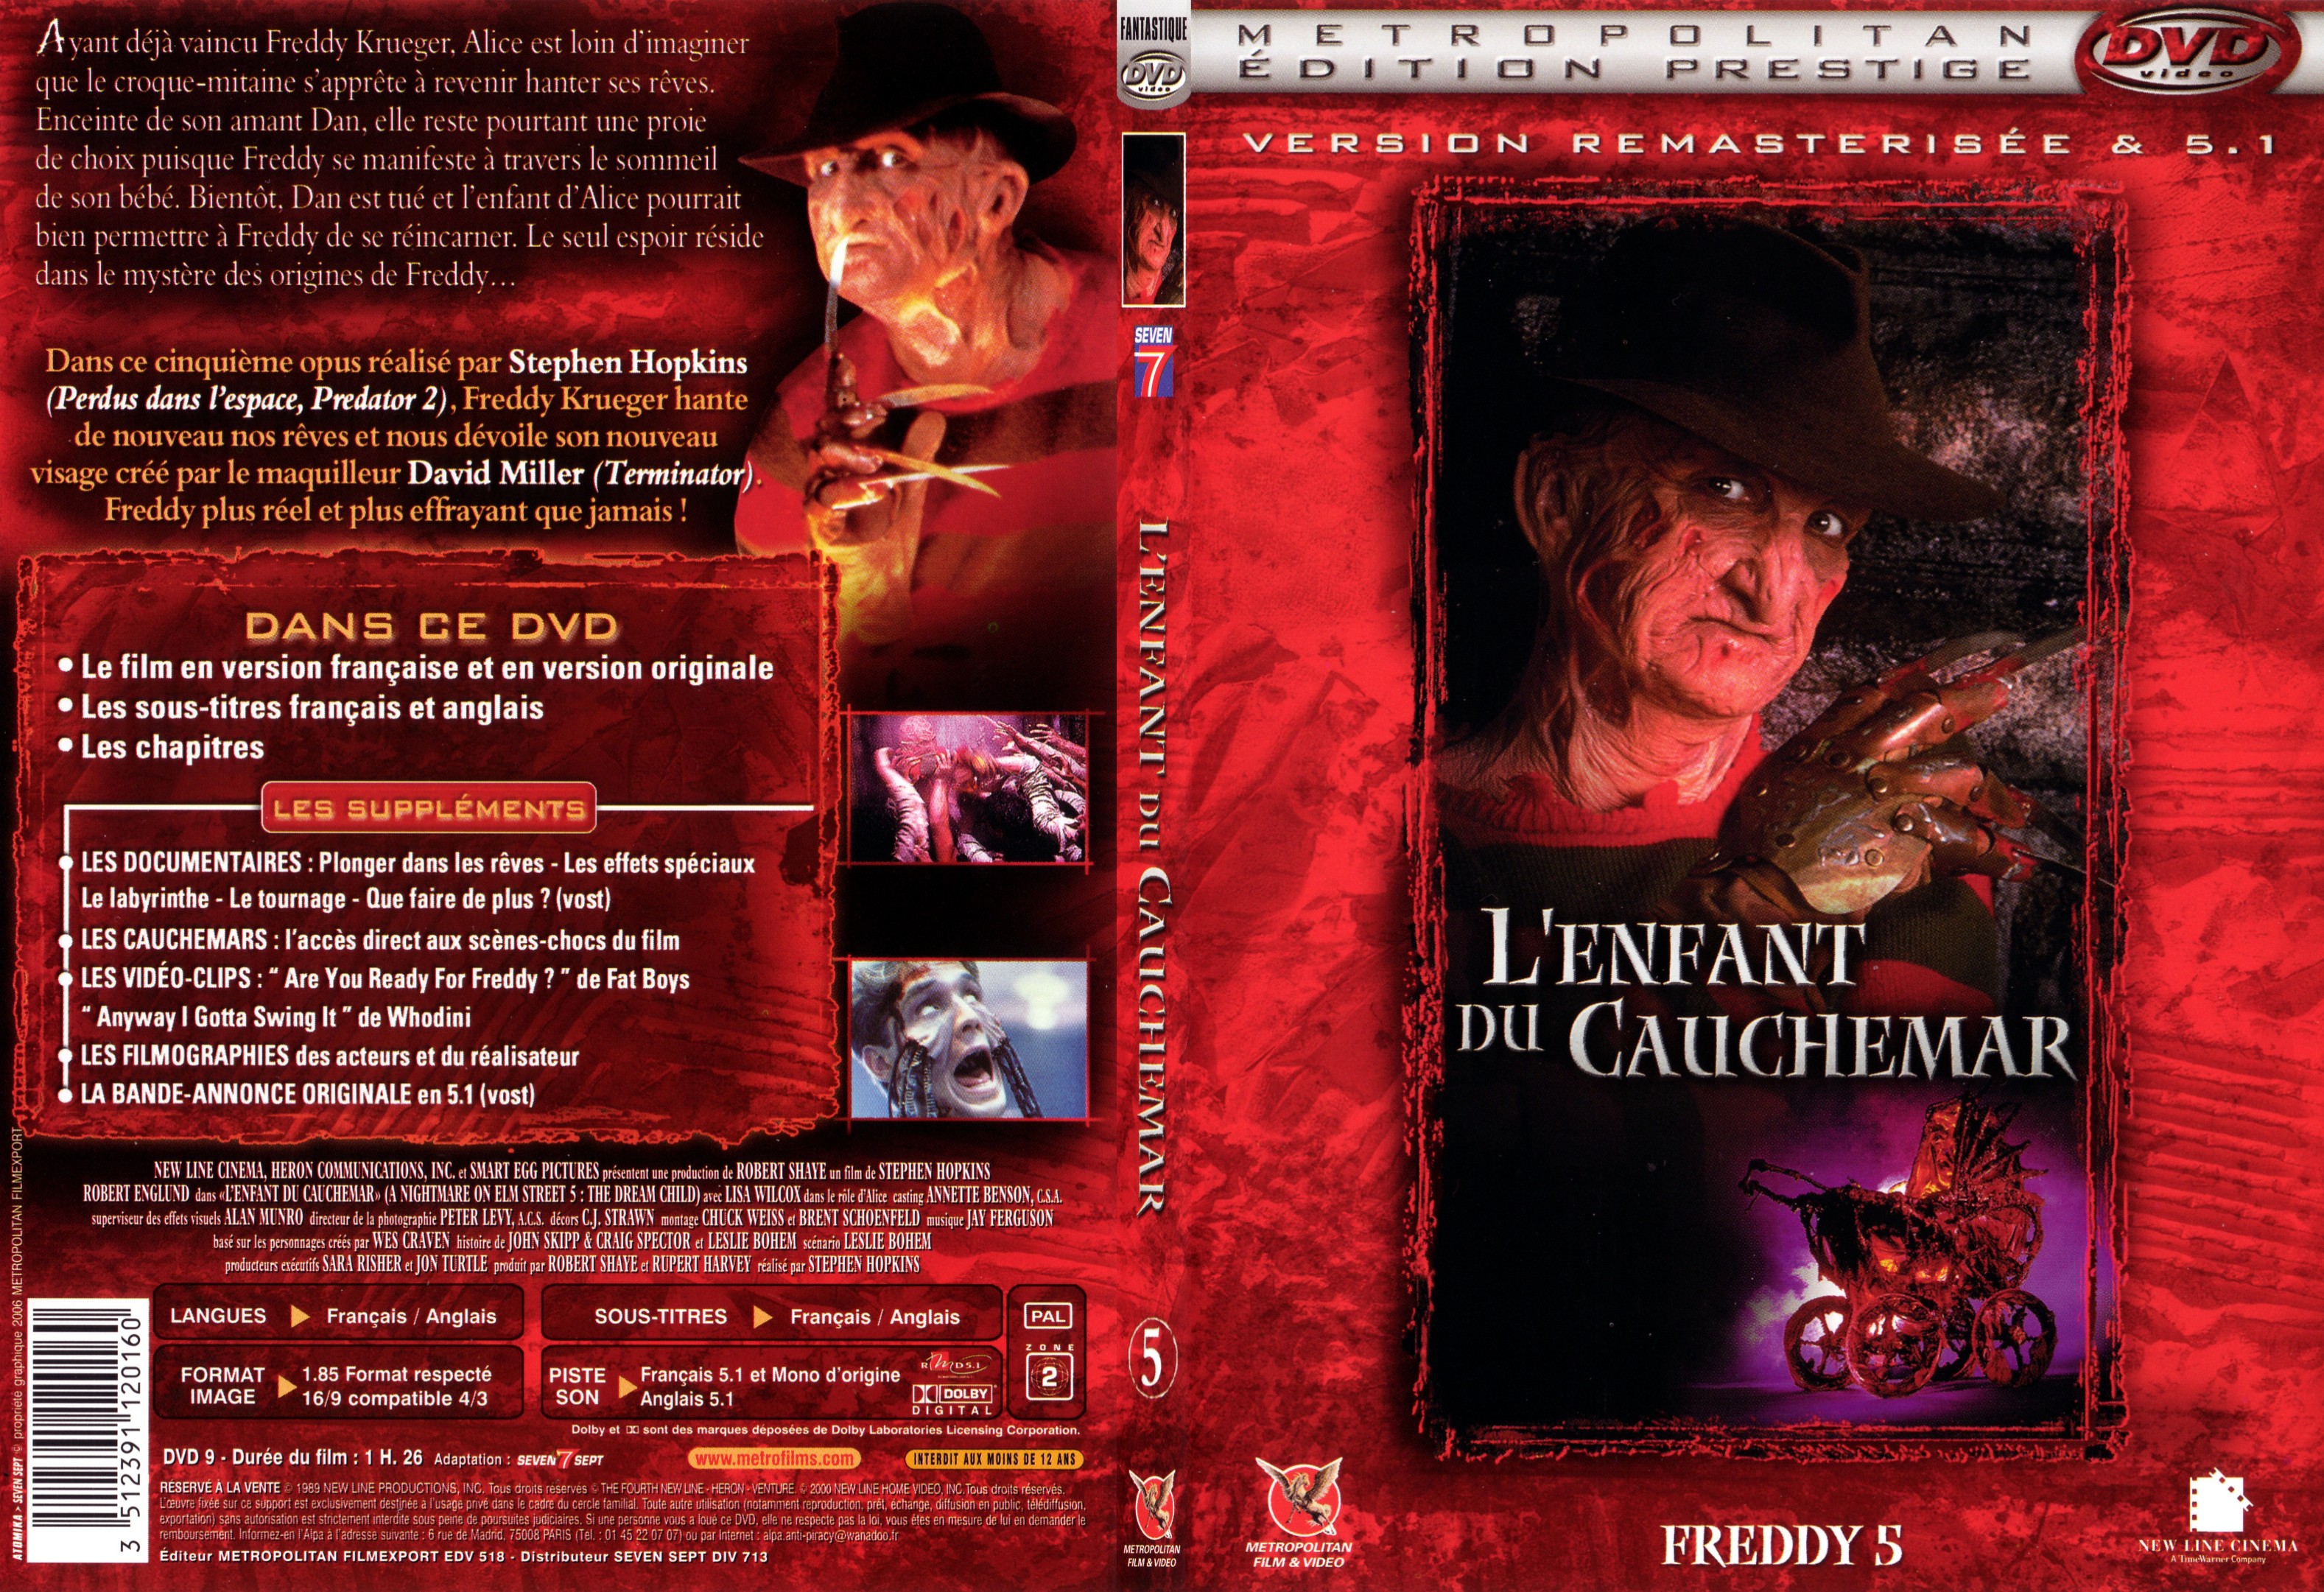 Jaquette DVD Freddy 5 L